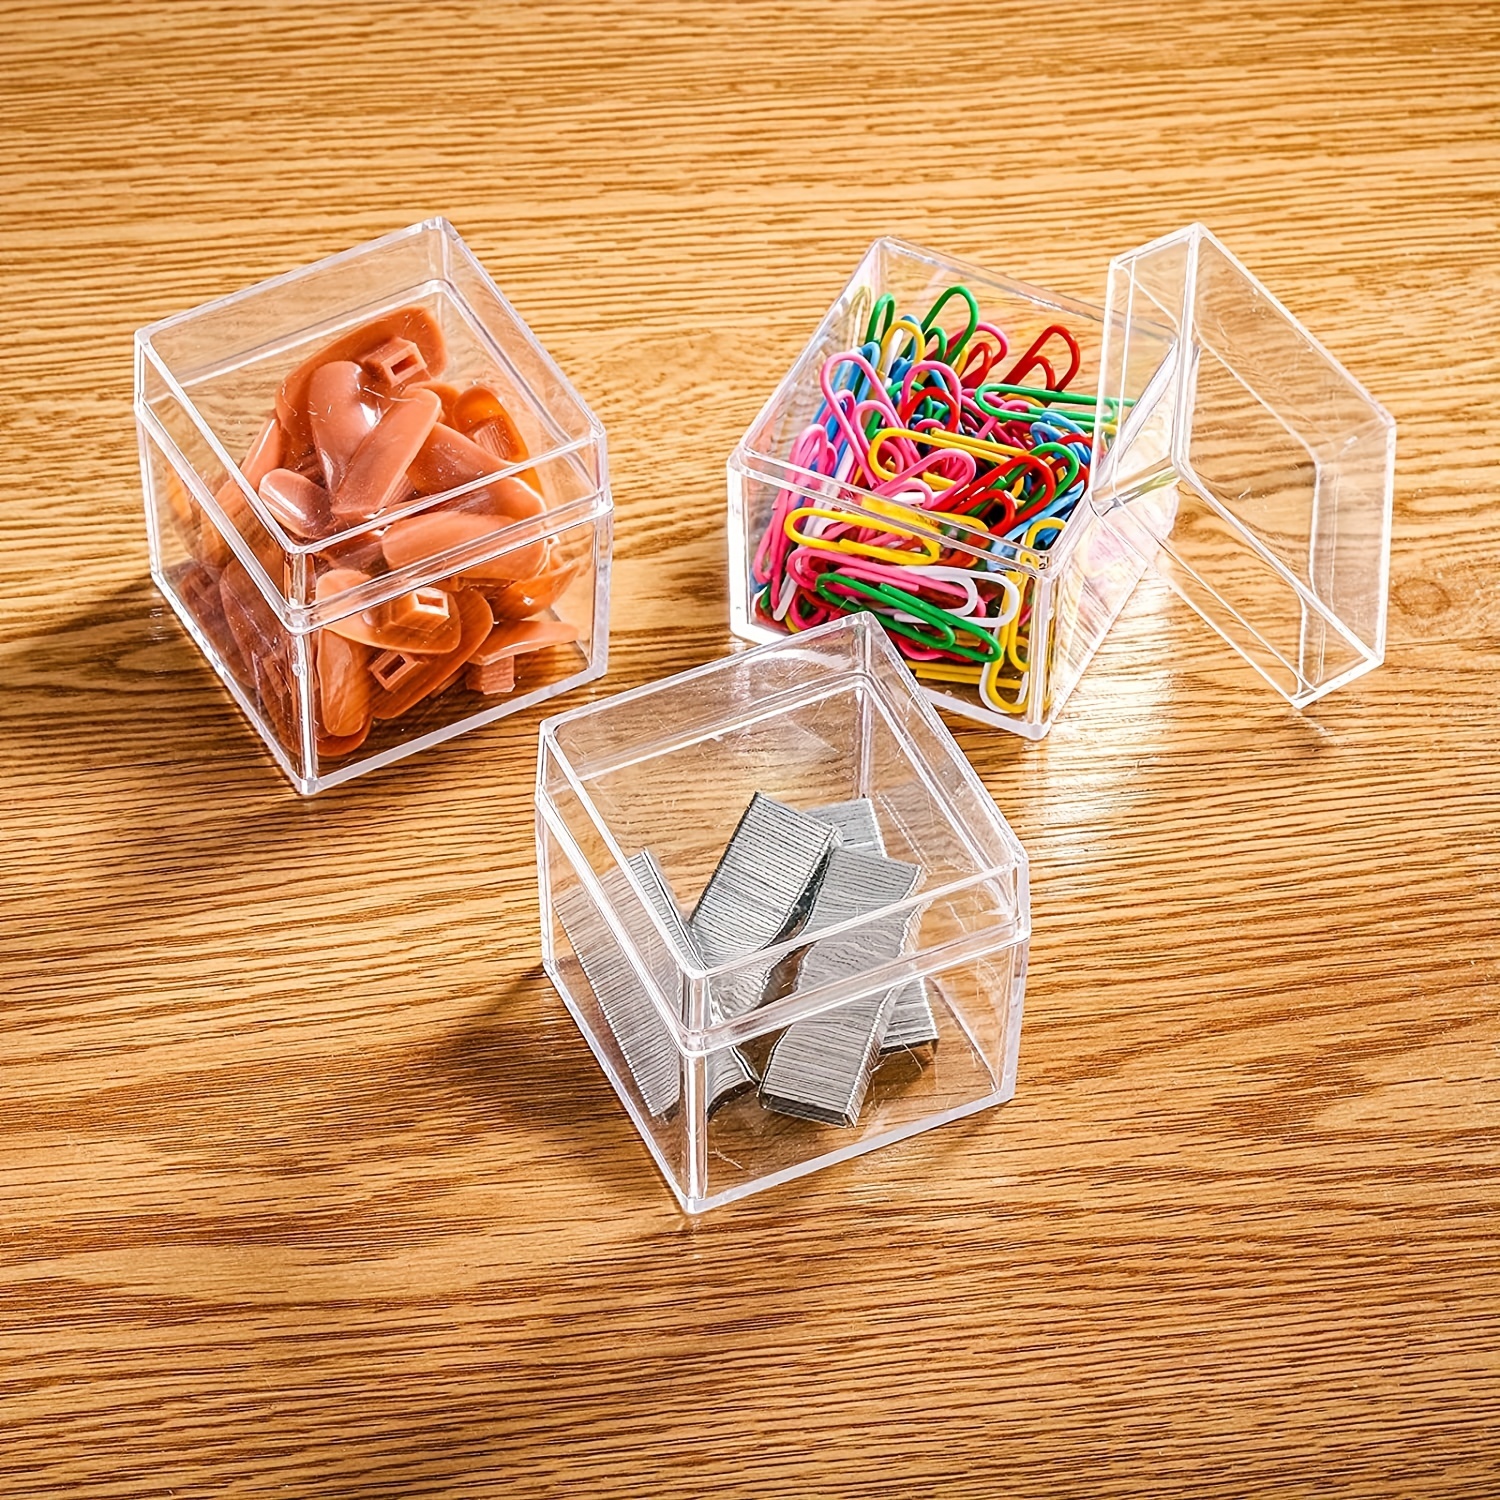 Clear Pet Plastic Storage Boxes 24 Pack 2x2x2